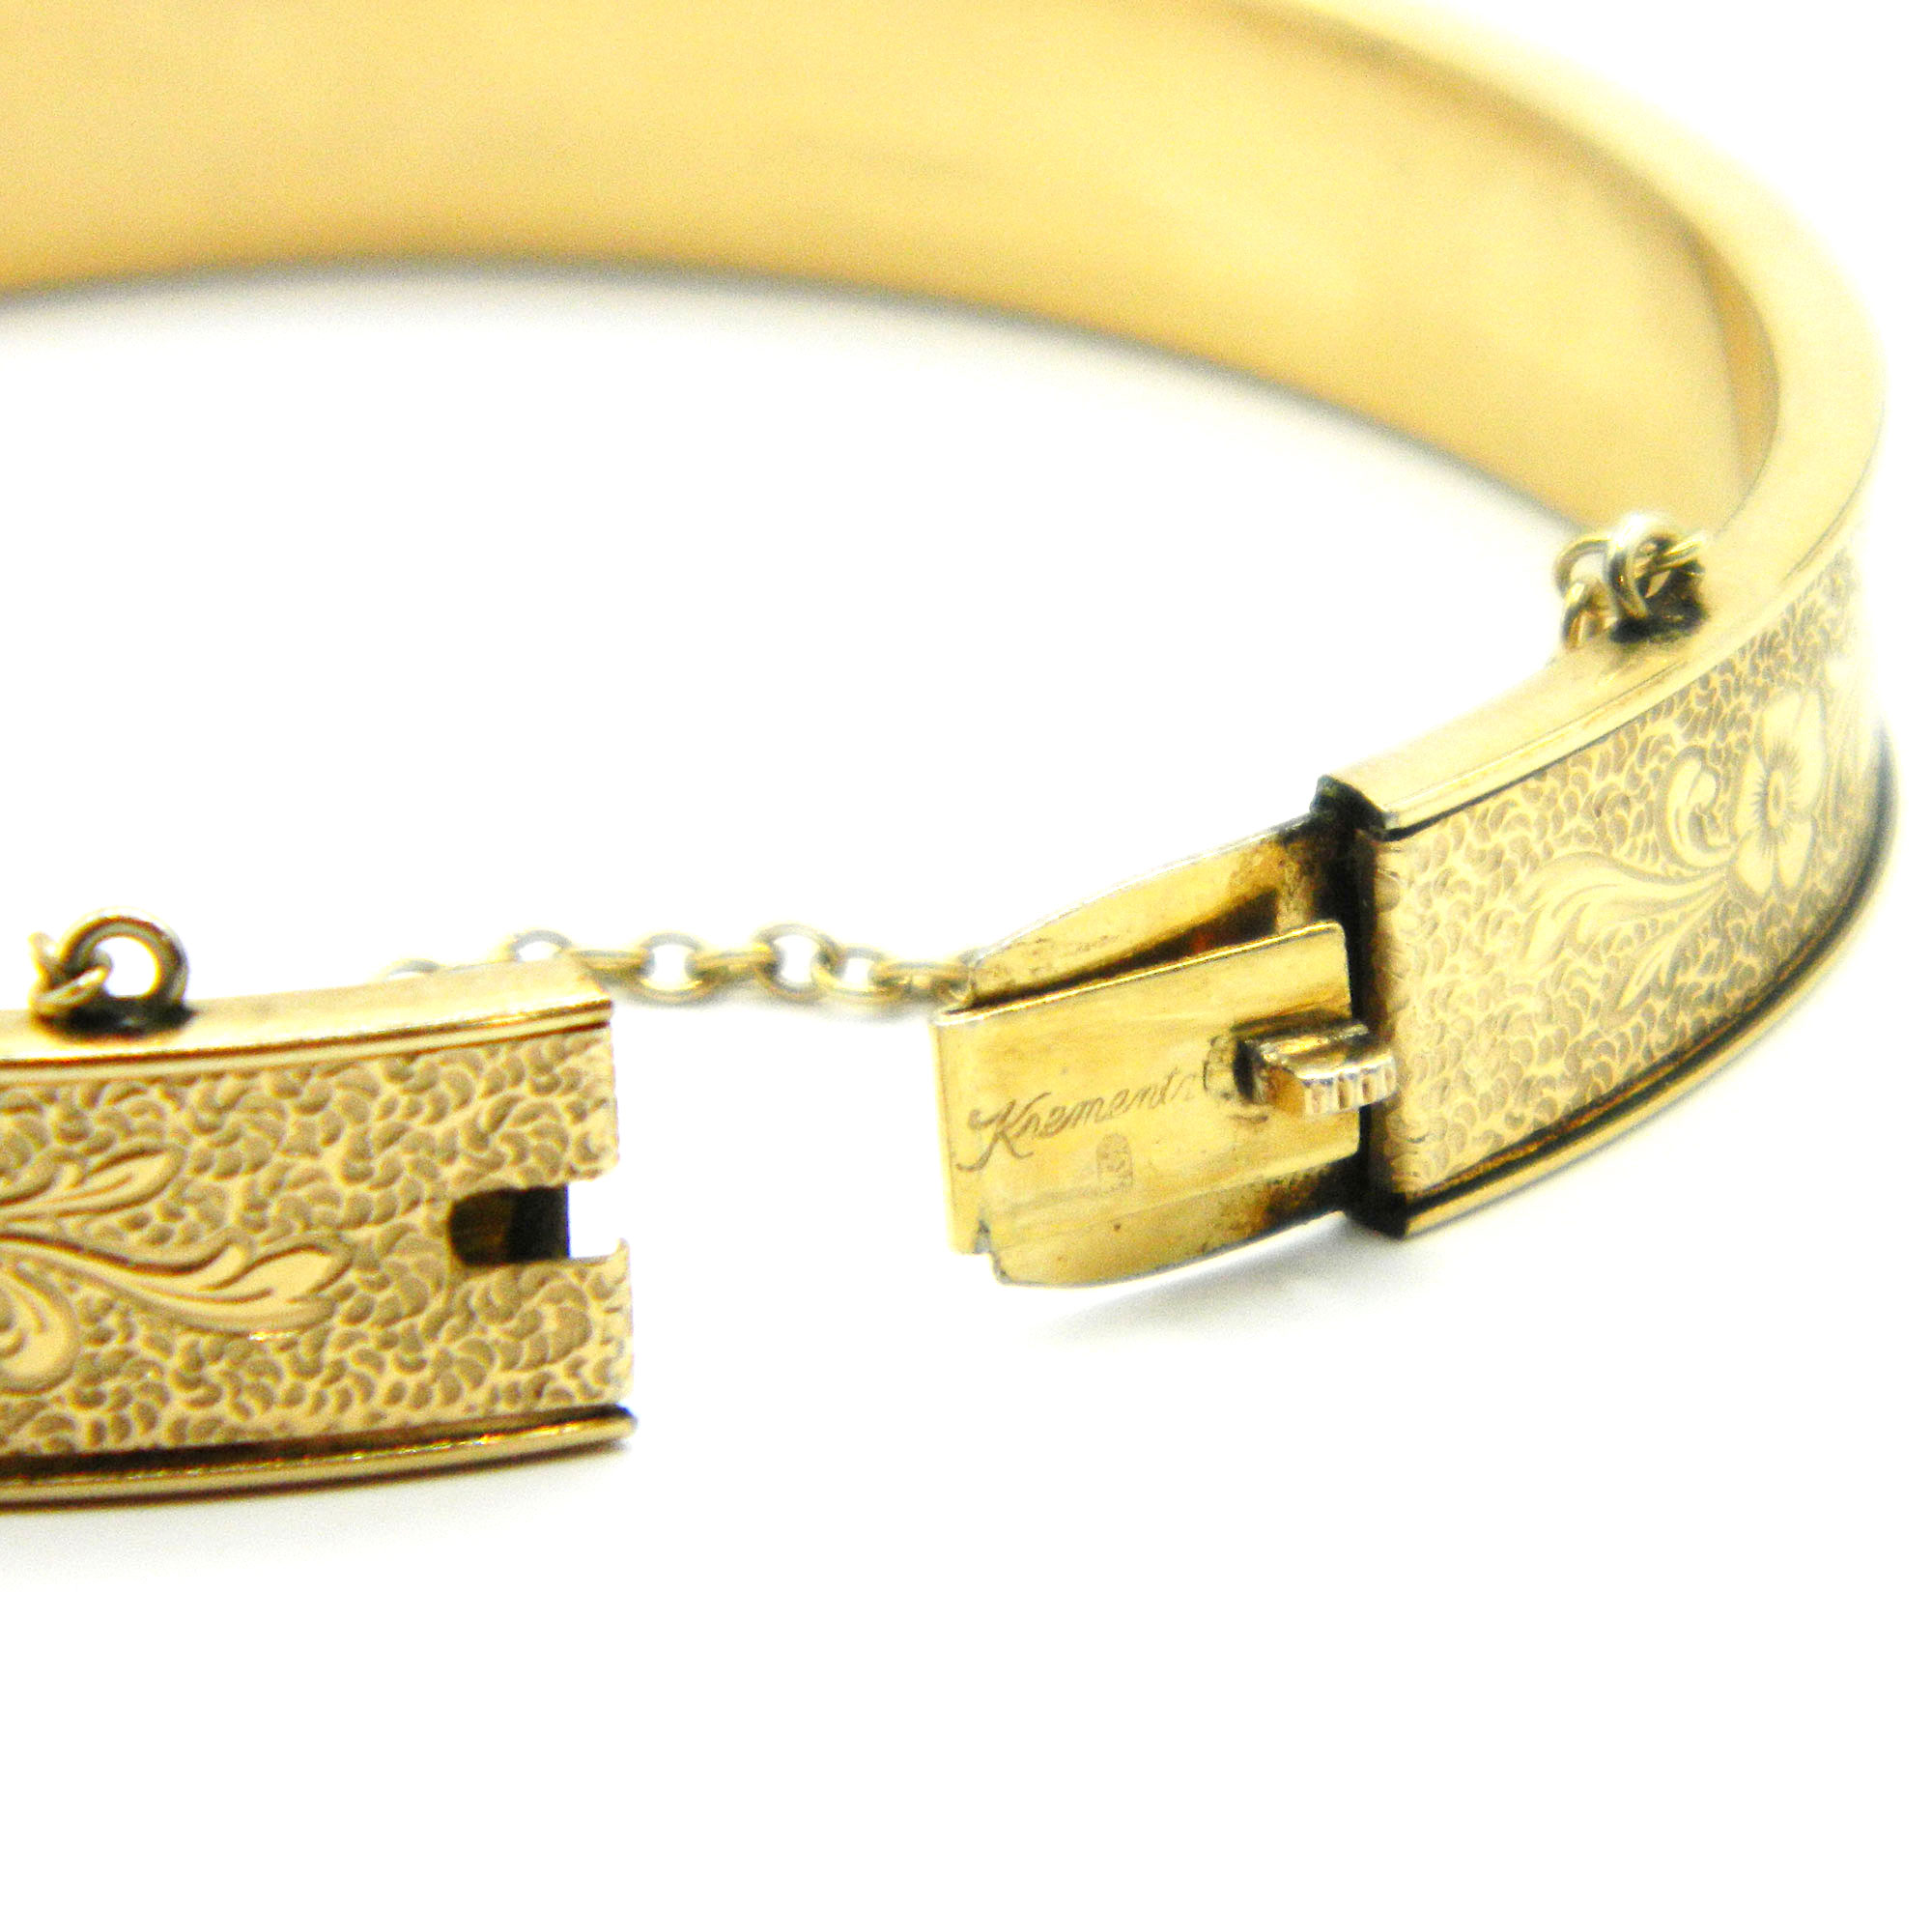 Krementz gold filled bangle bracelet